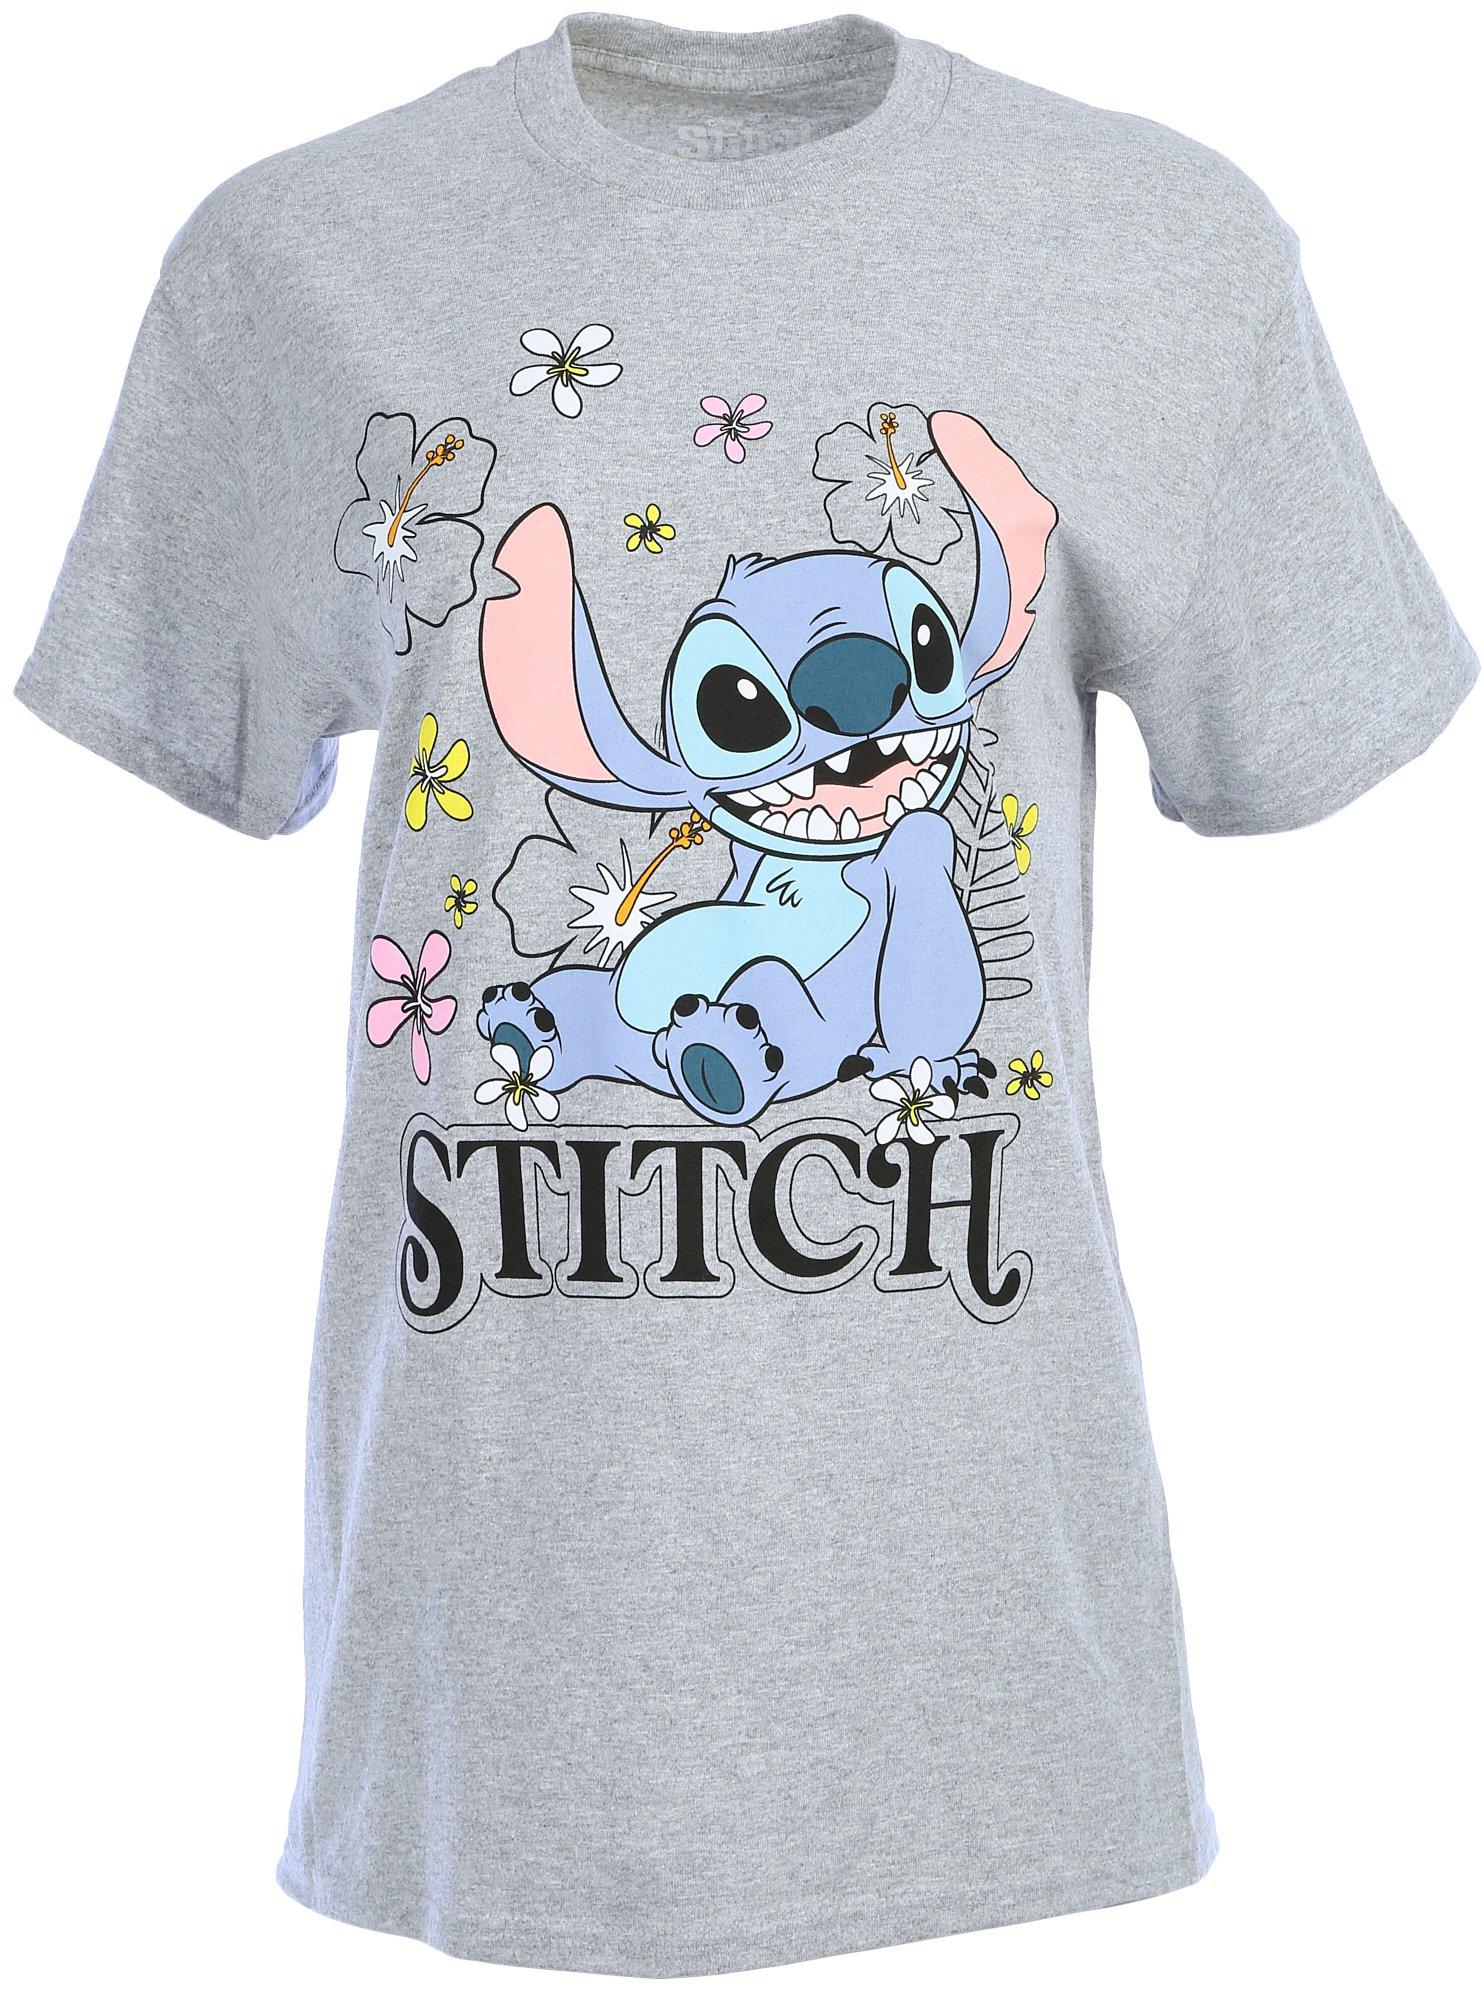 Juniors Stitch Graphic Tee